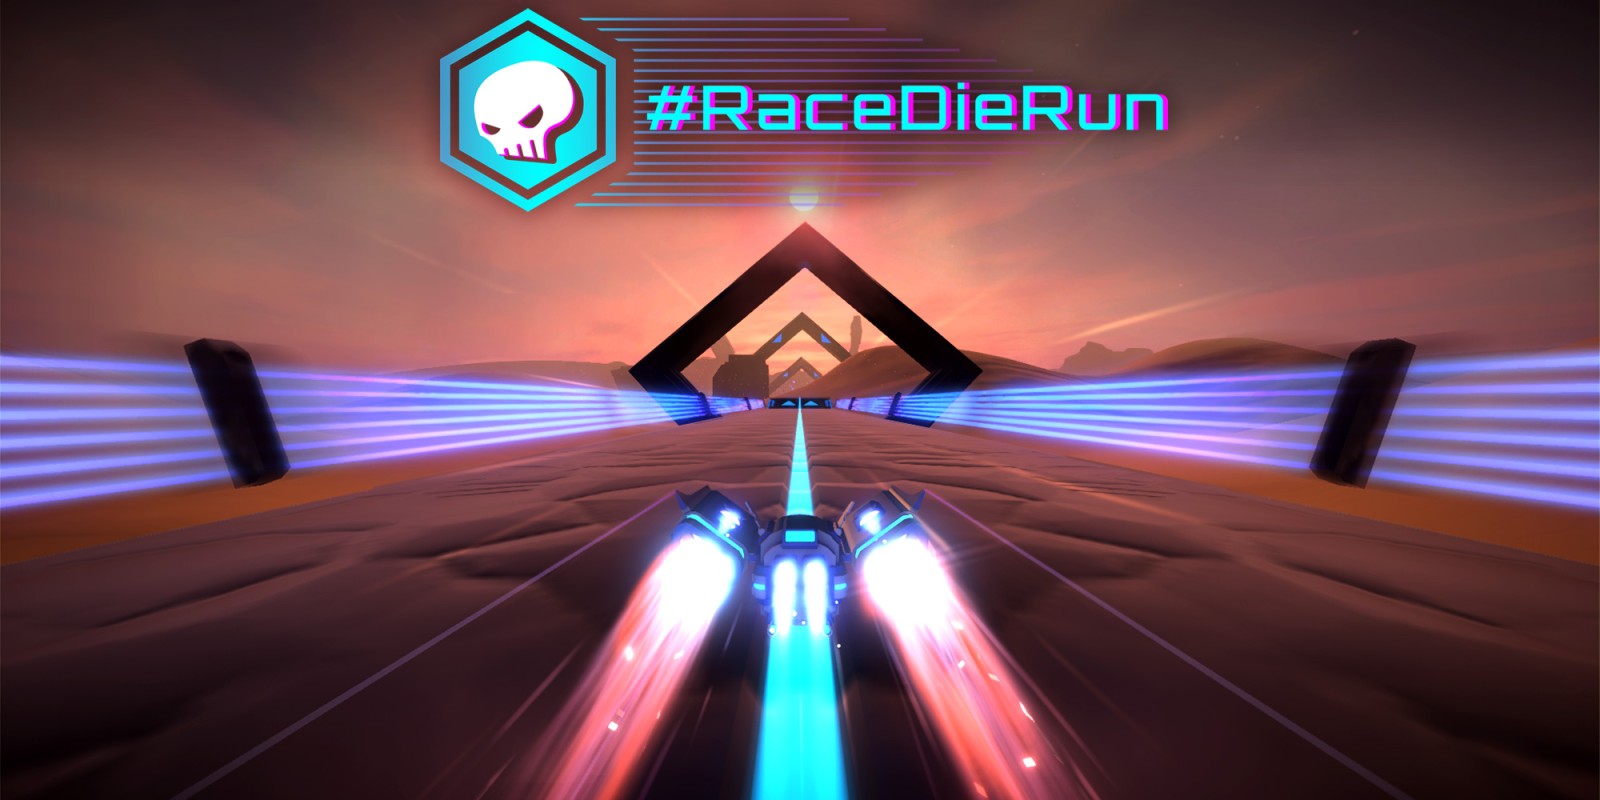 #RaceDieRun